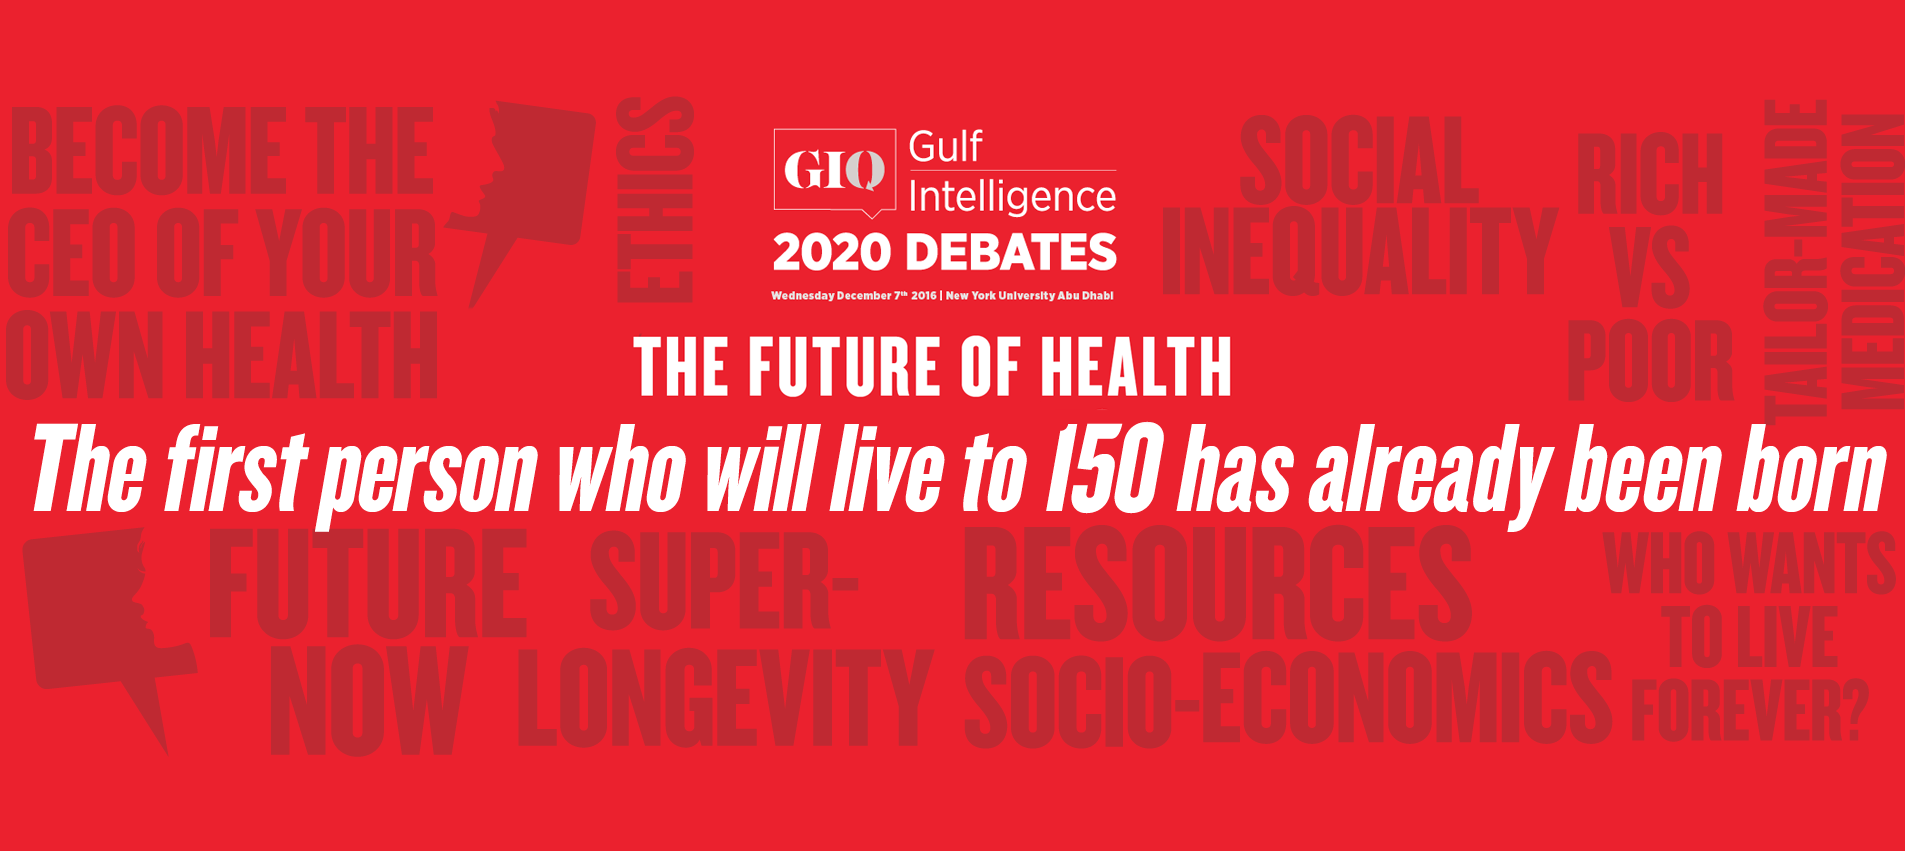 GIQ 2020 Debates Q4 2016